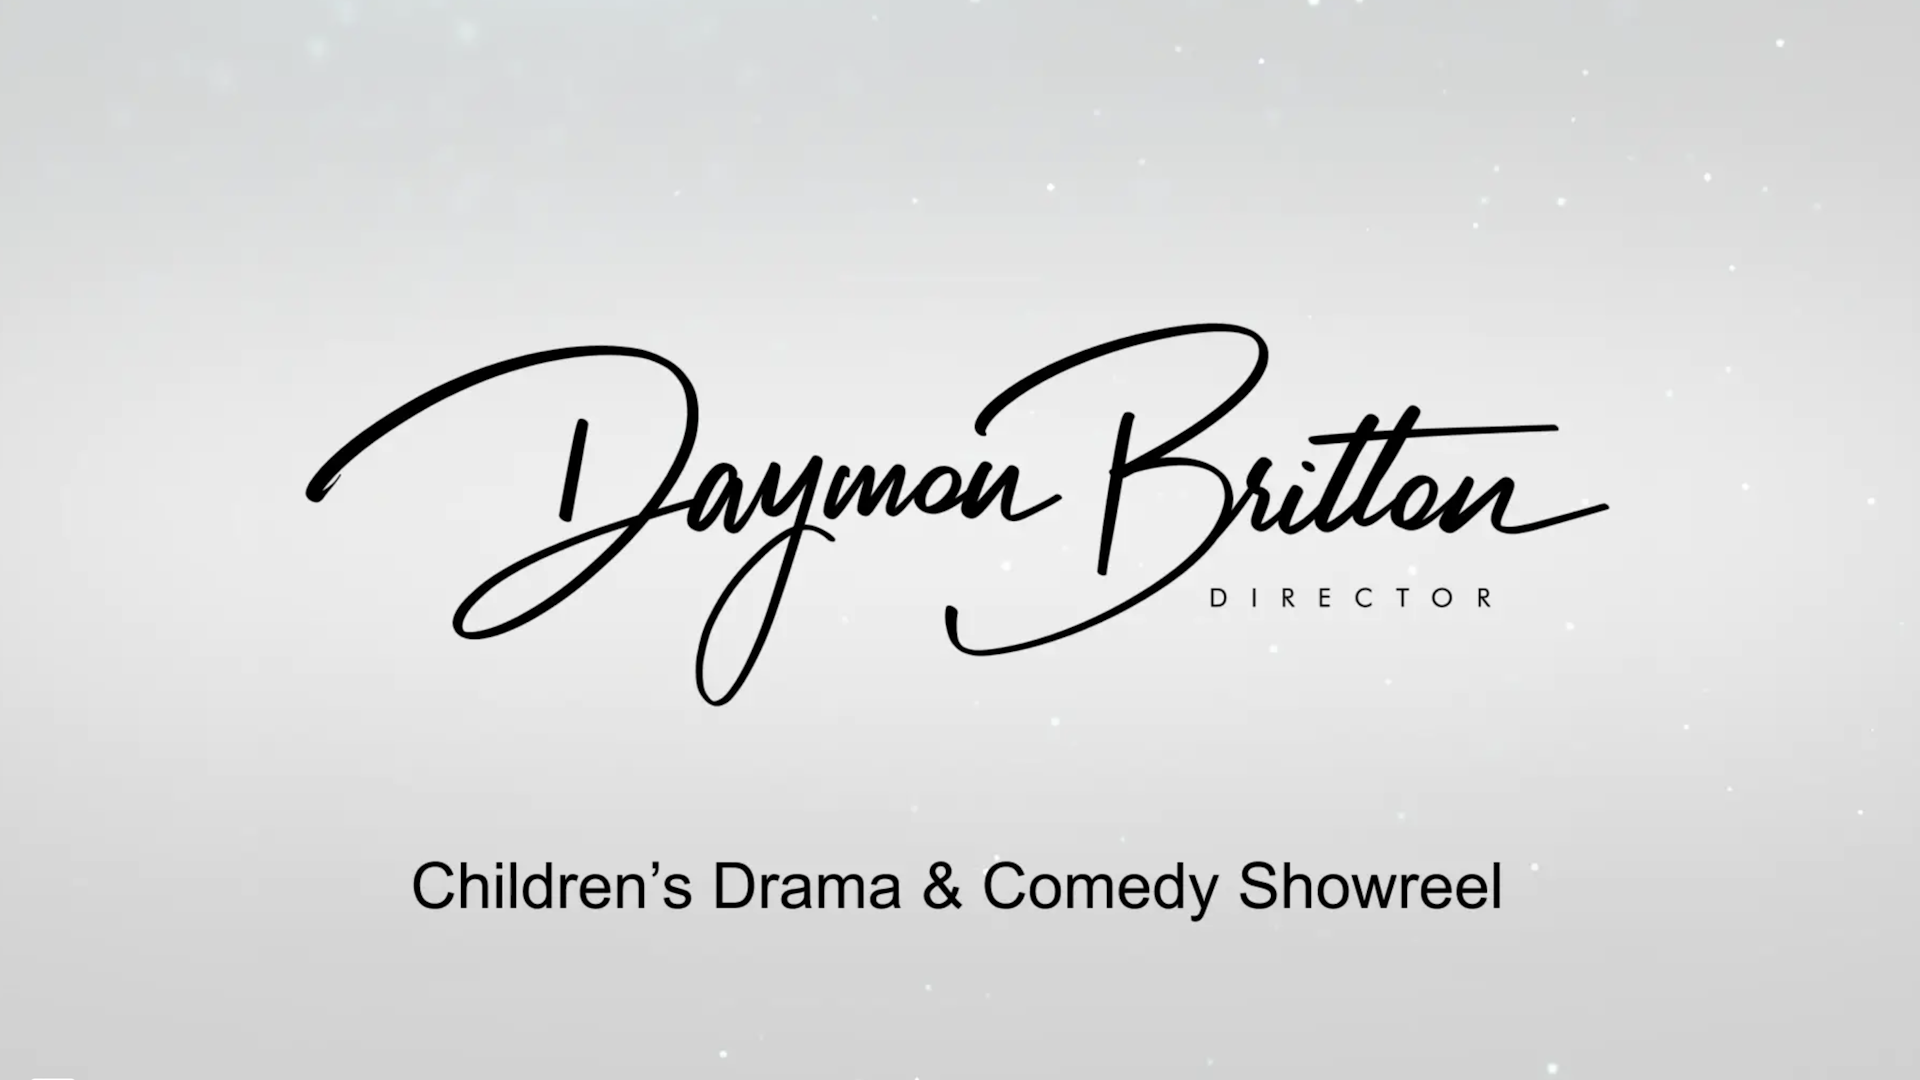 Children's Drama & Comedy Showreel